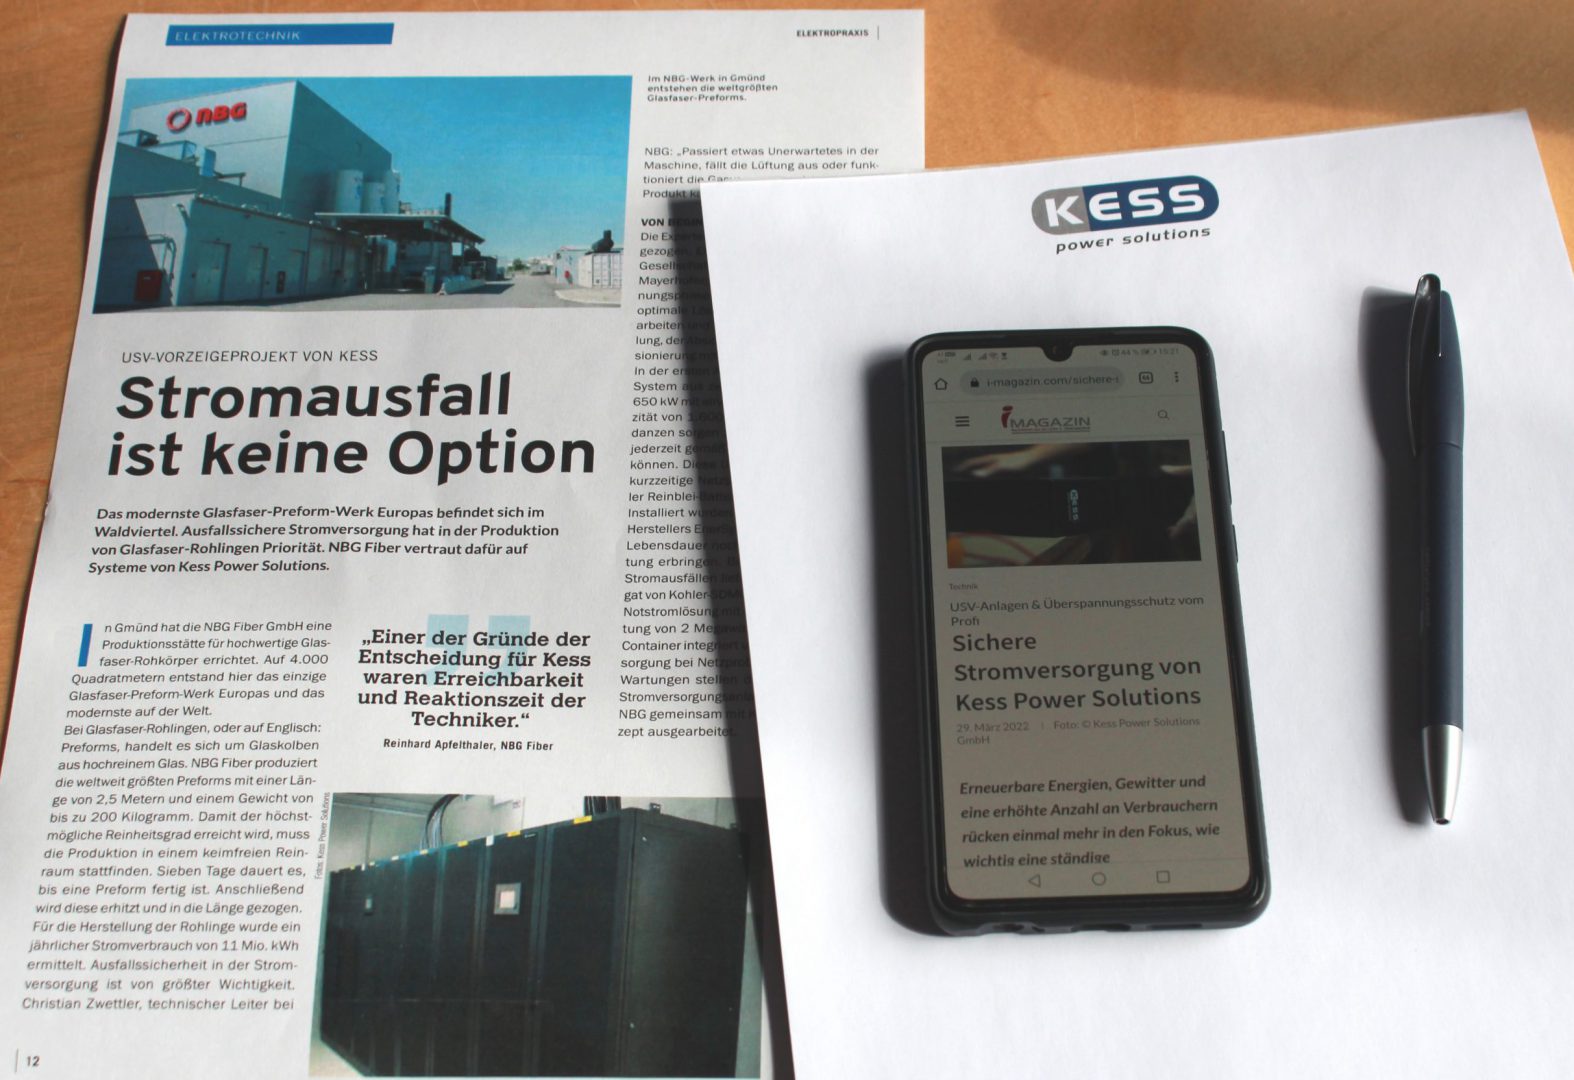 KESS Power Solutions in der Presse